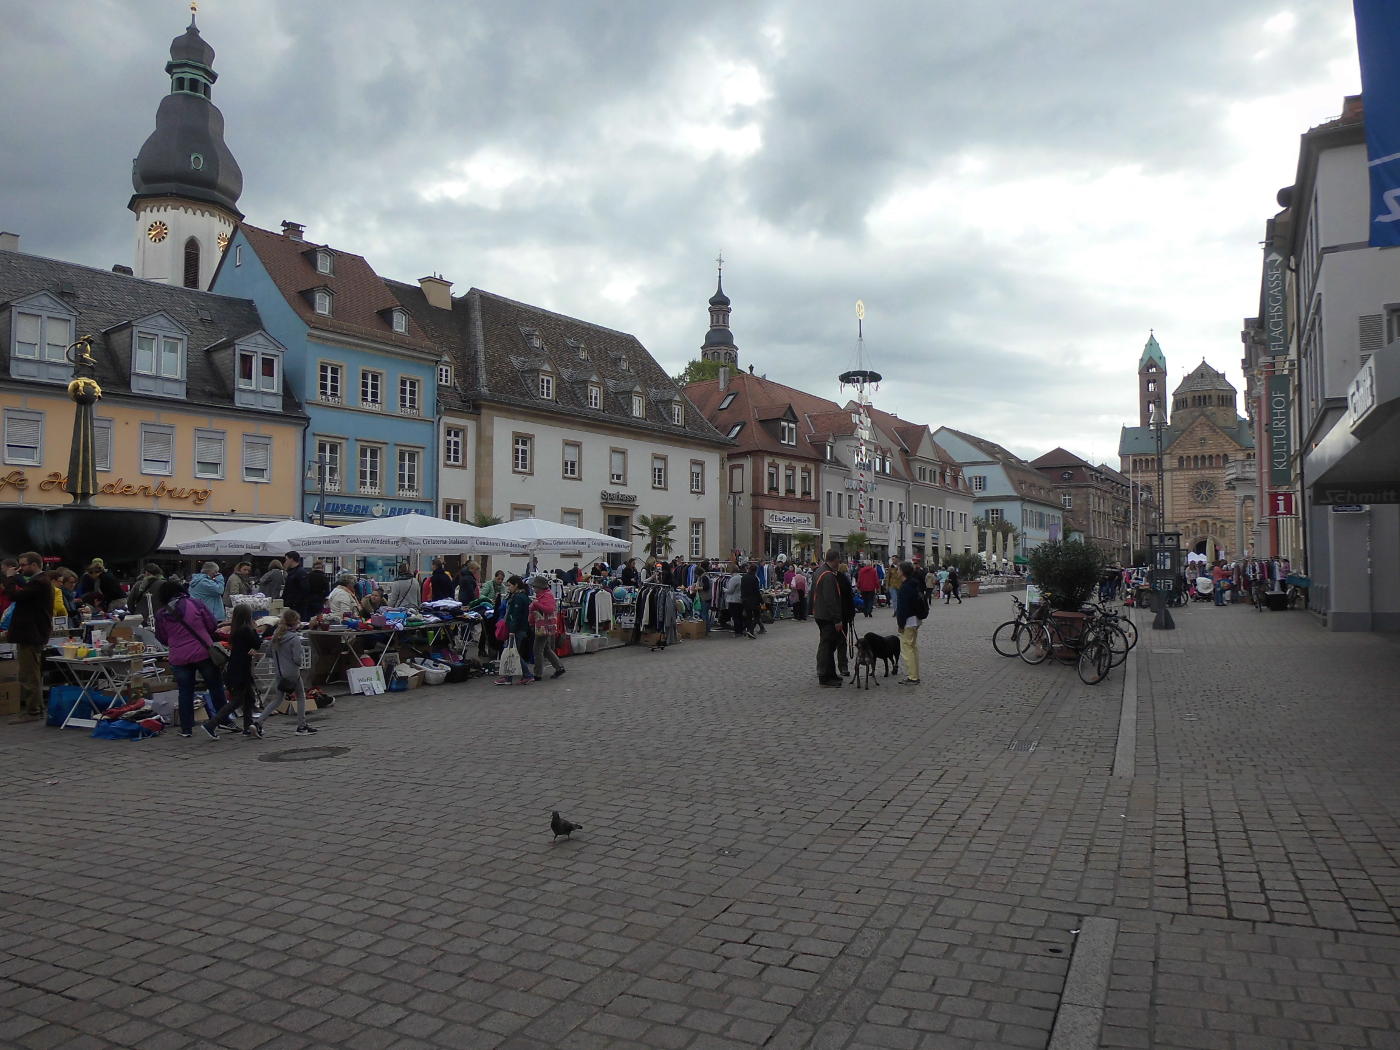 Speyer: Watchtower spell broken